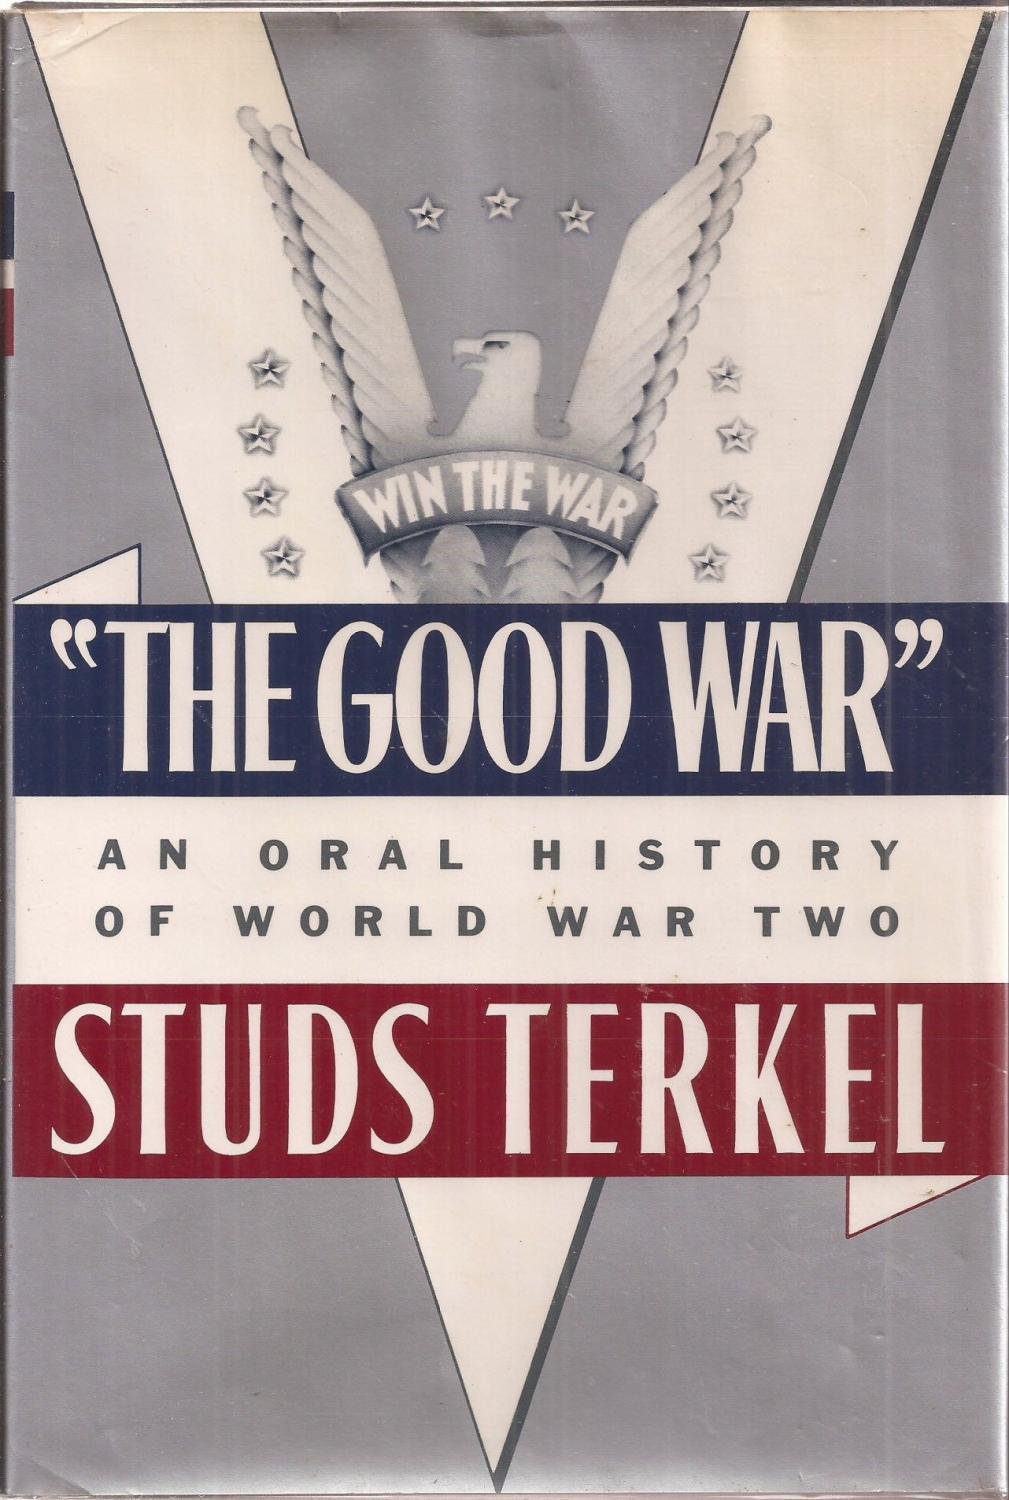 Studs Terkel - duplicate: "The Good War" (Hardcover, 1984, Pantheon)